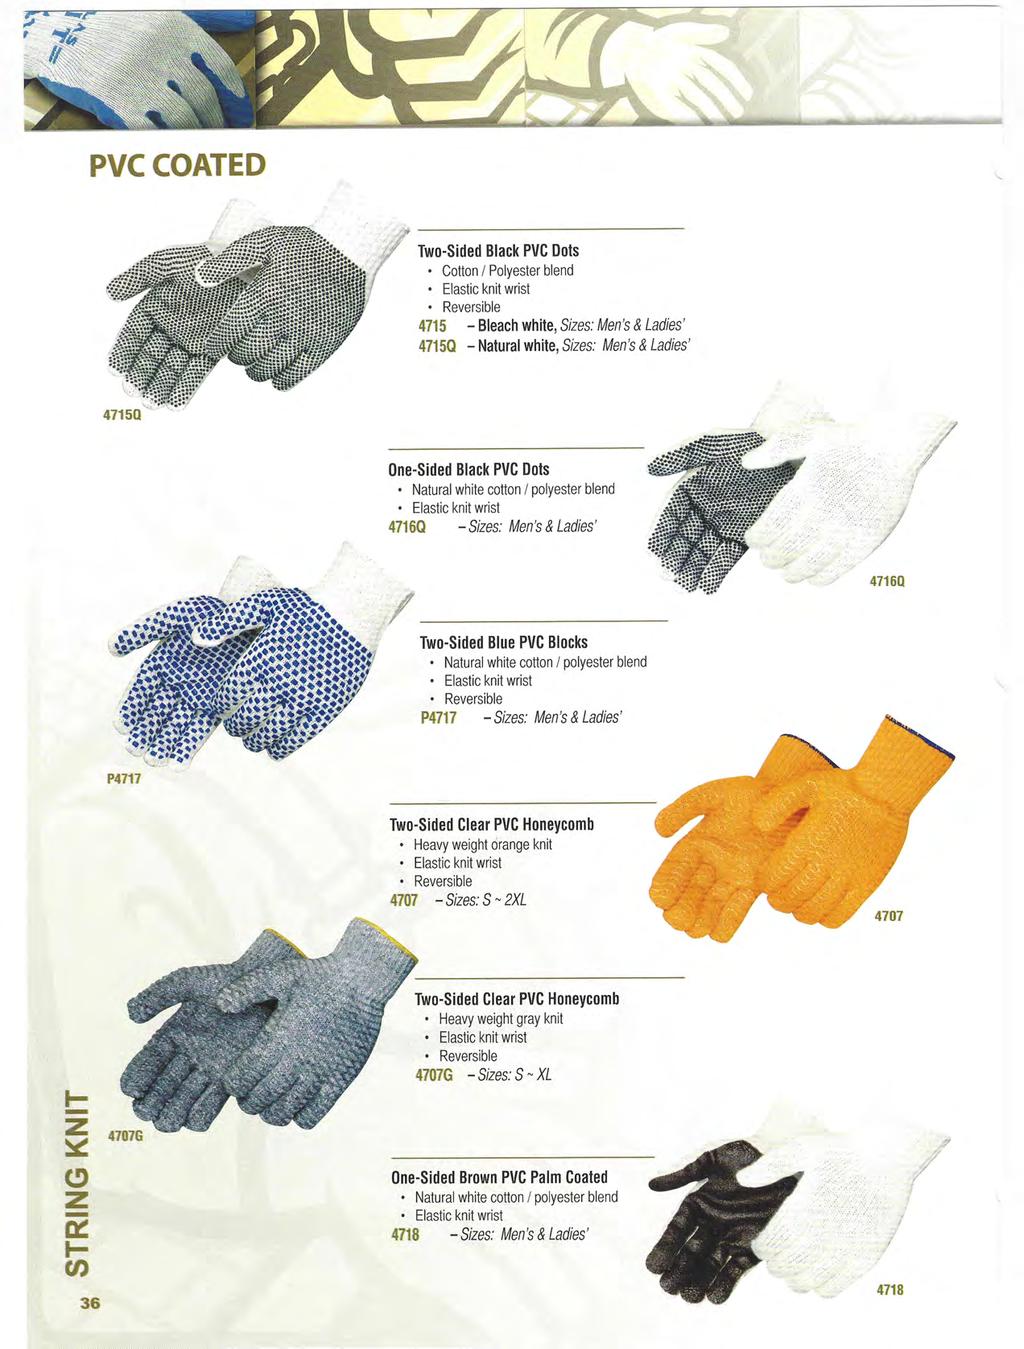 PVC COATED ------- -------- Two-Sided Black PVC Dots Cotton I Polyester blend Elastic knit wrist Reversible 4715 - Bleach white, Sizes: Men's & Ladies' 4715 - Natural white, Sizes: Men's & Ladies'